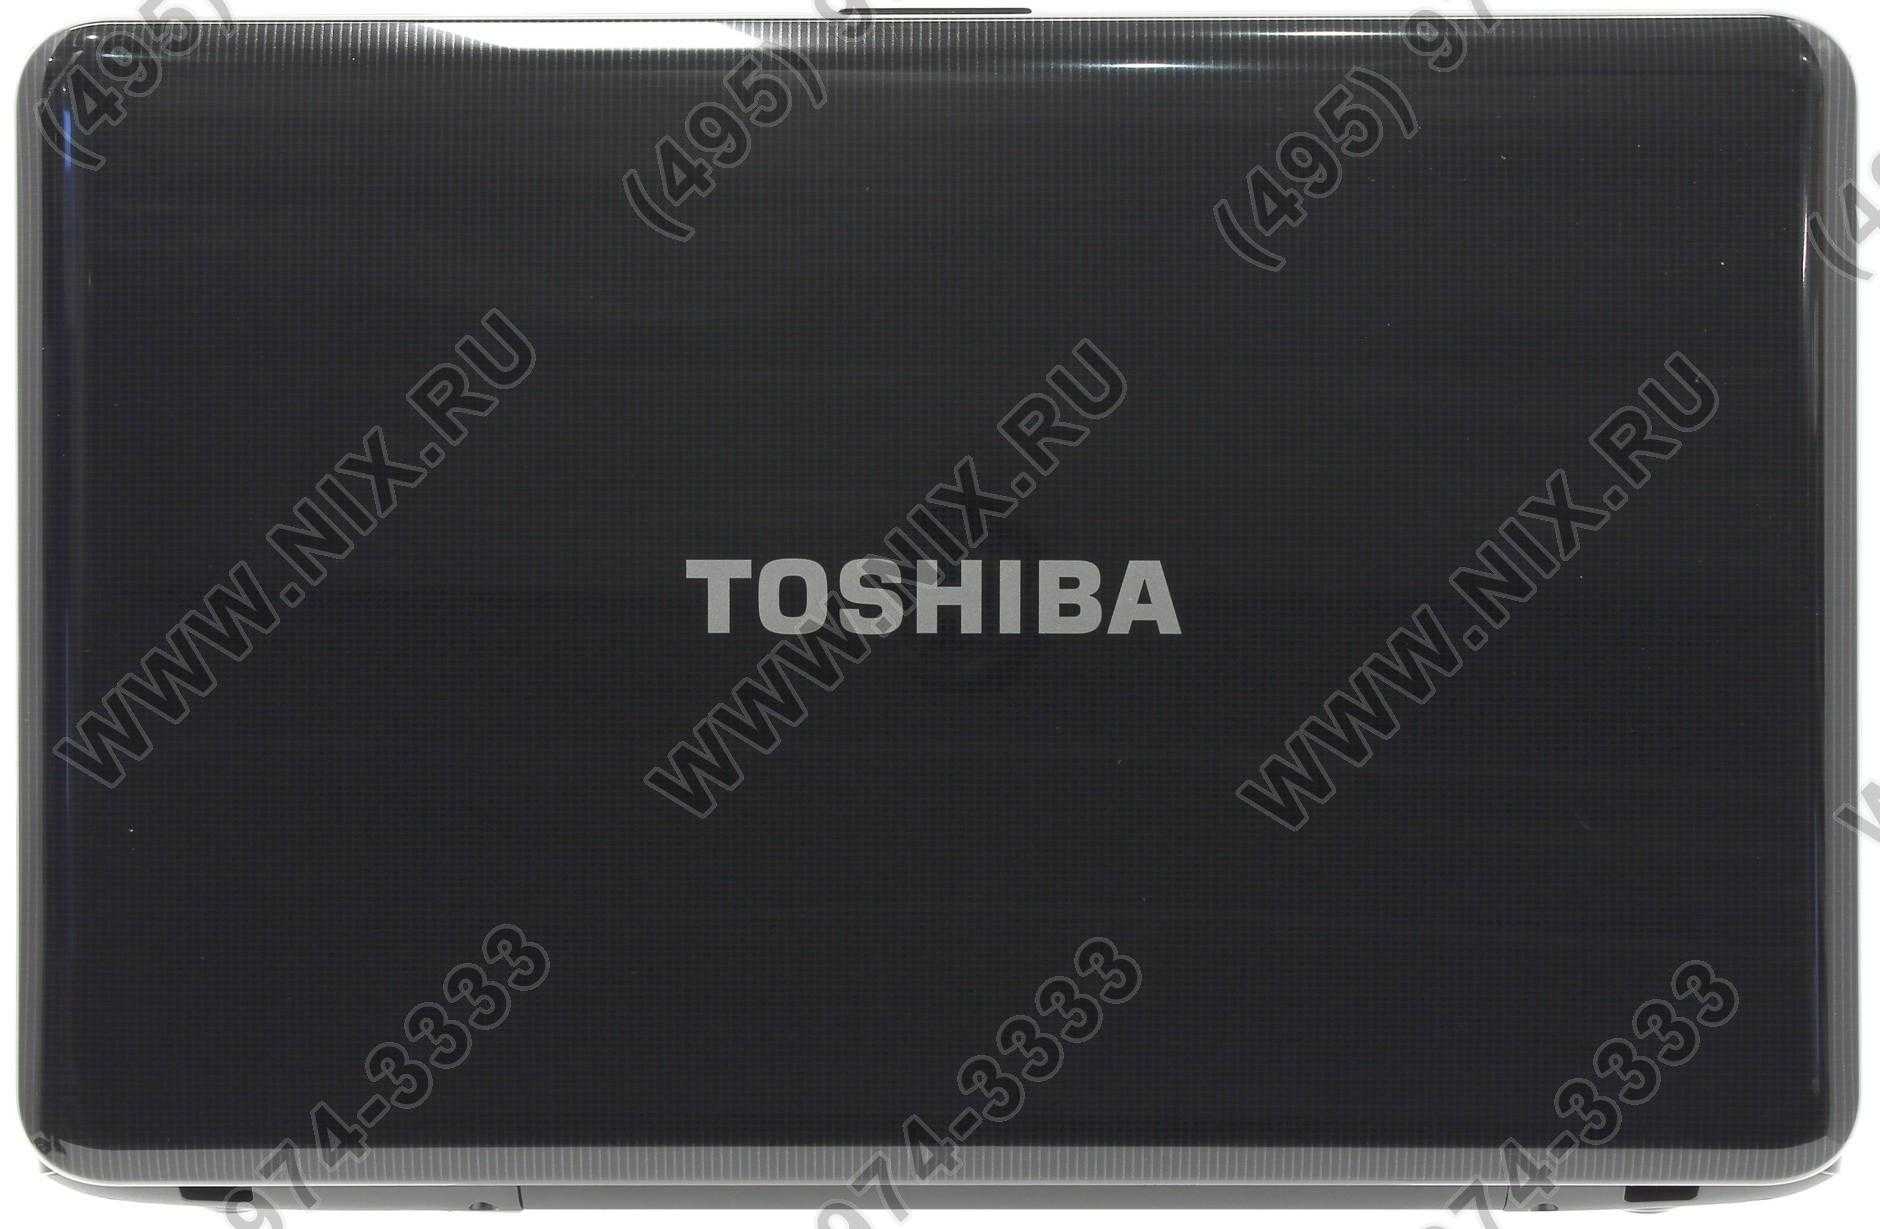 Ноутбук toshiba satellite c850-eks — купить, цена и характеристики, отзывы